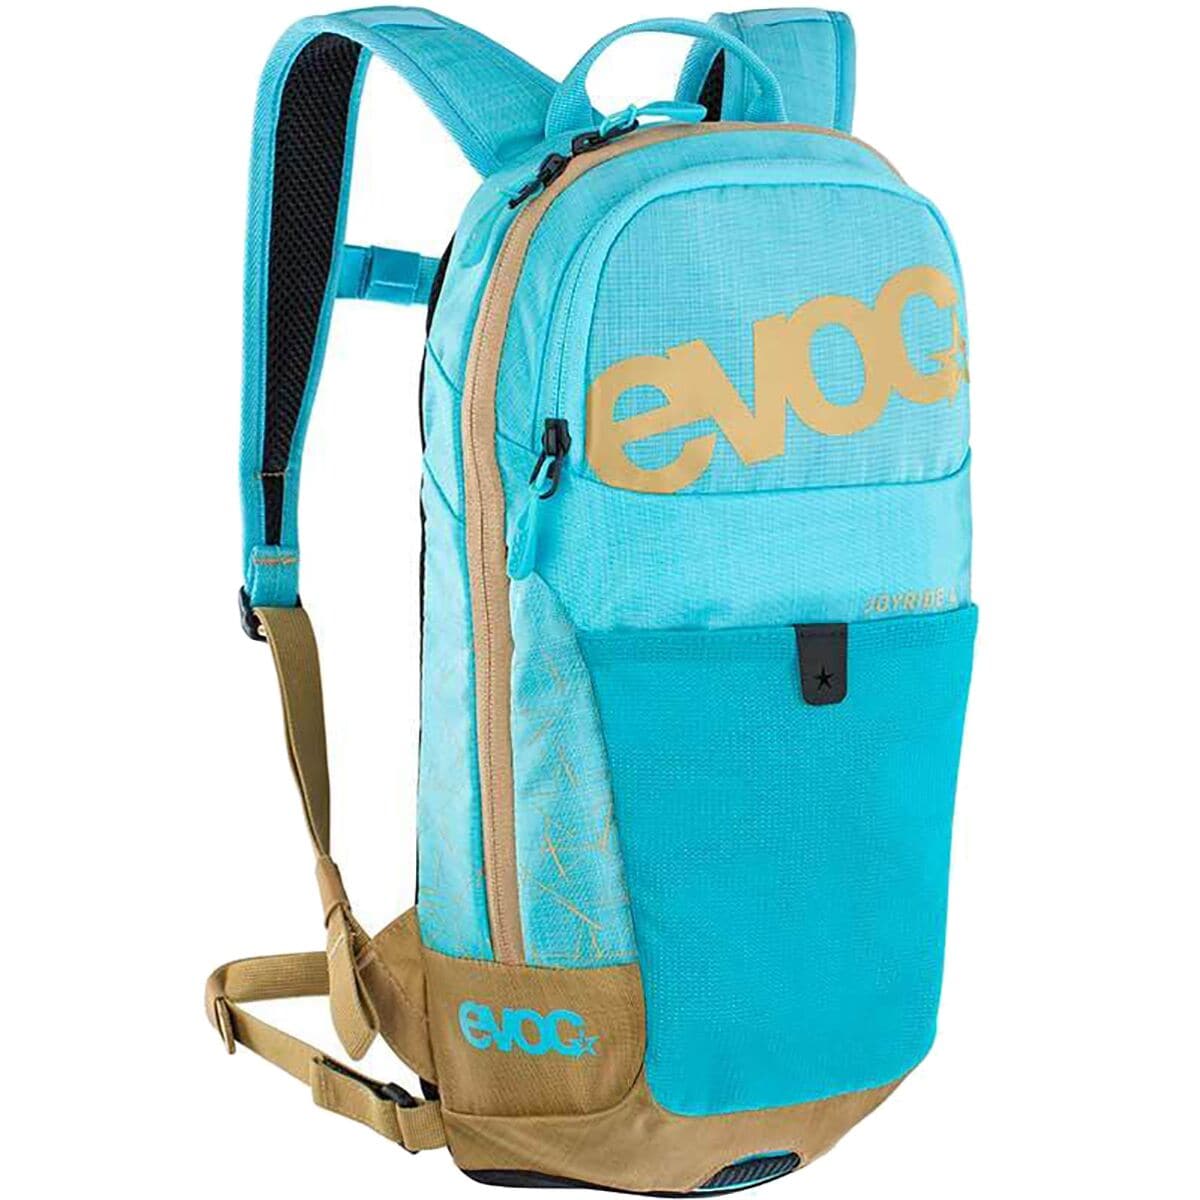 Evoc Joyride 5L Hydration Backpack - Kids' Neon Blue/Gold, One Size